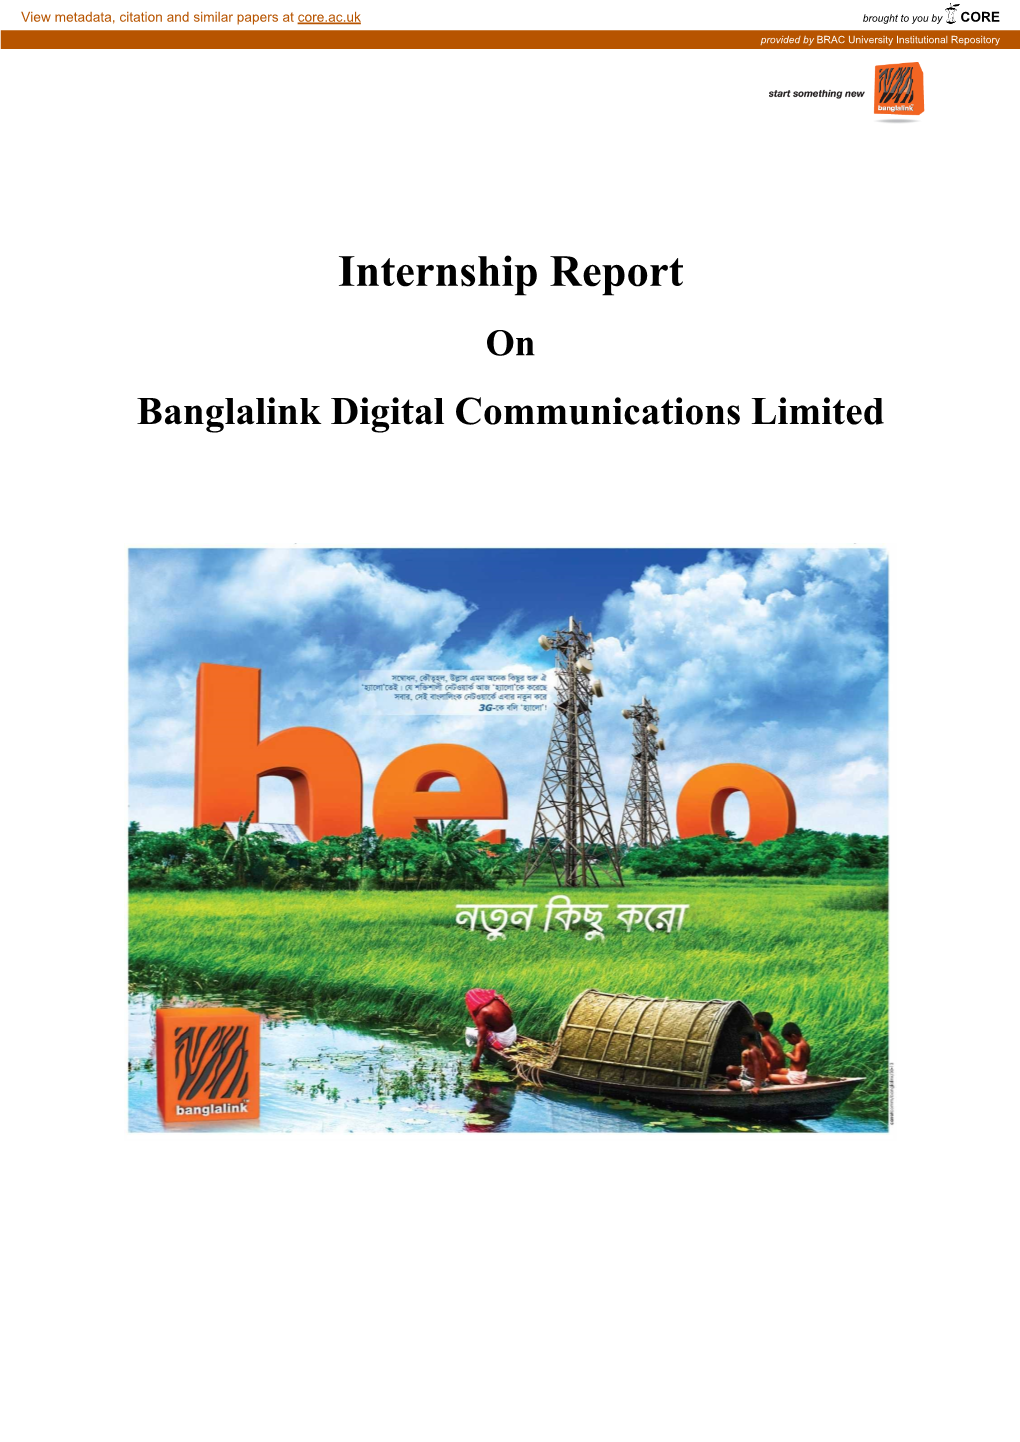 Internship Report on Banglalink Digital Communications Limited